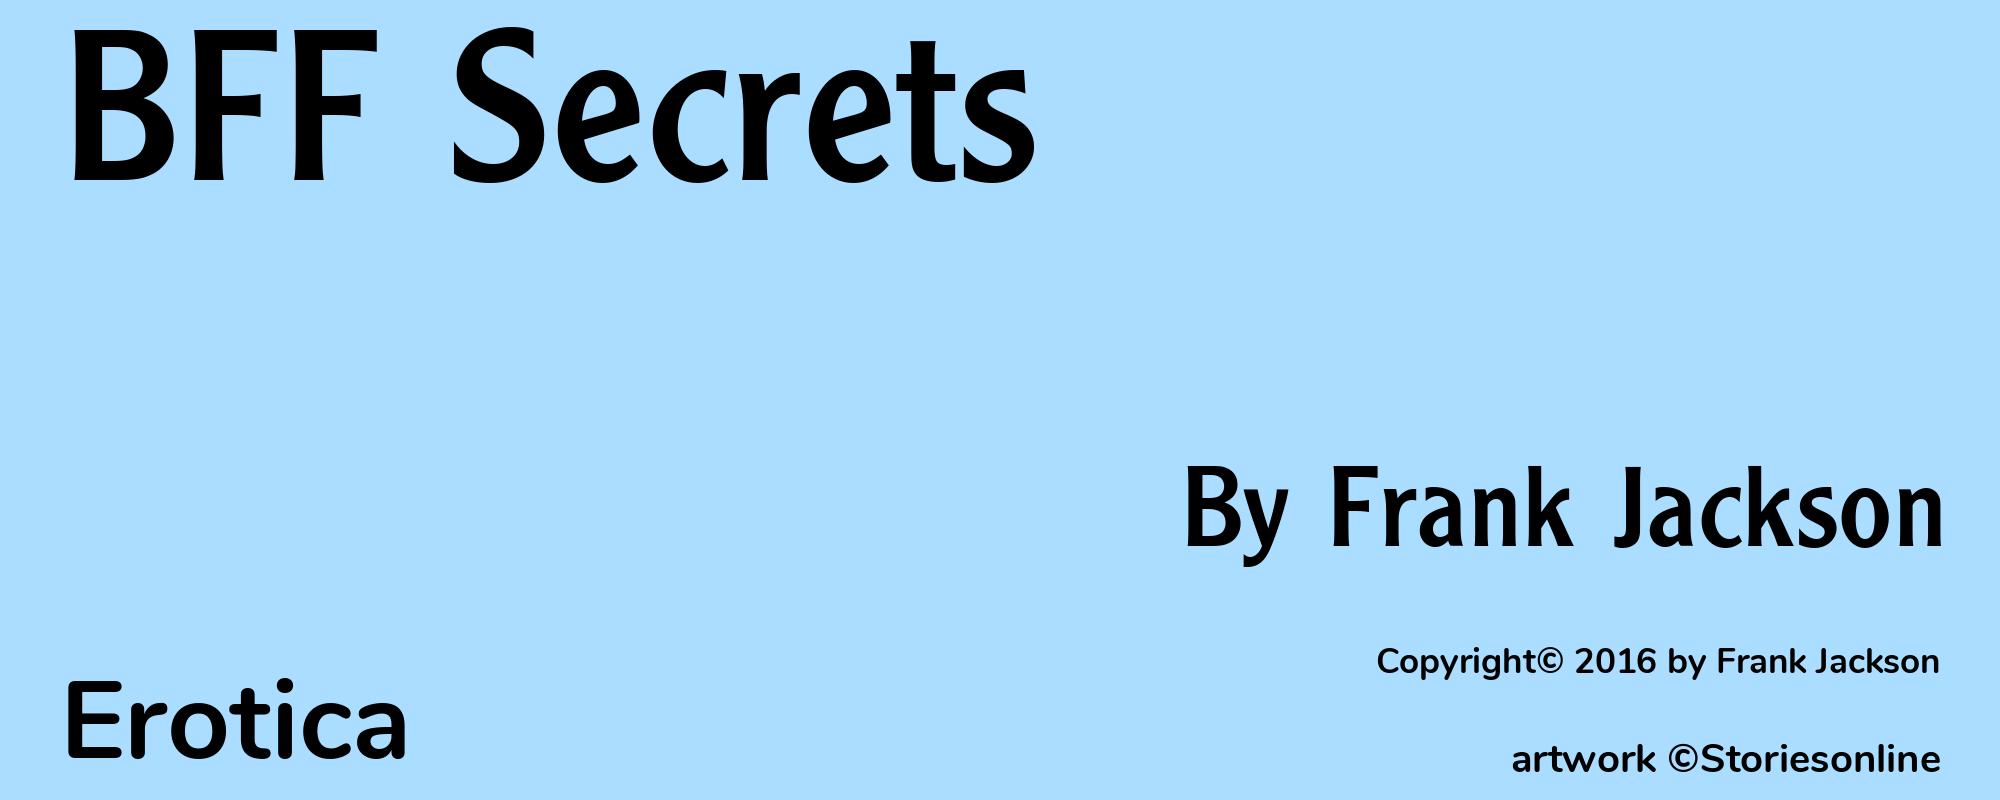 BFF Secrets - Cover